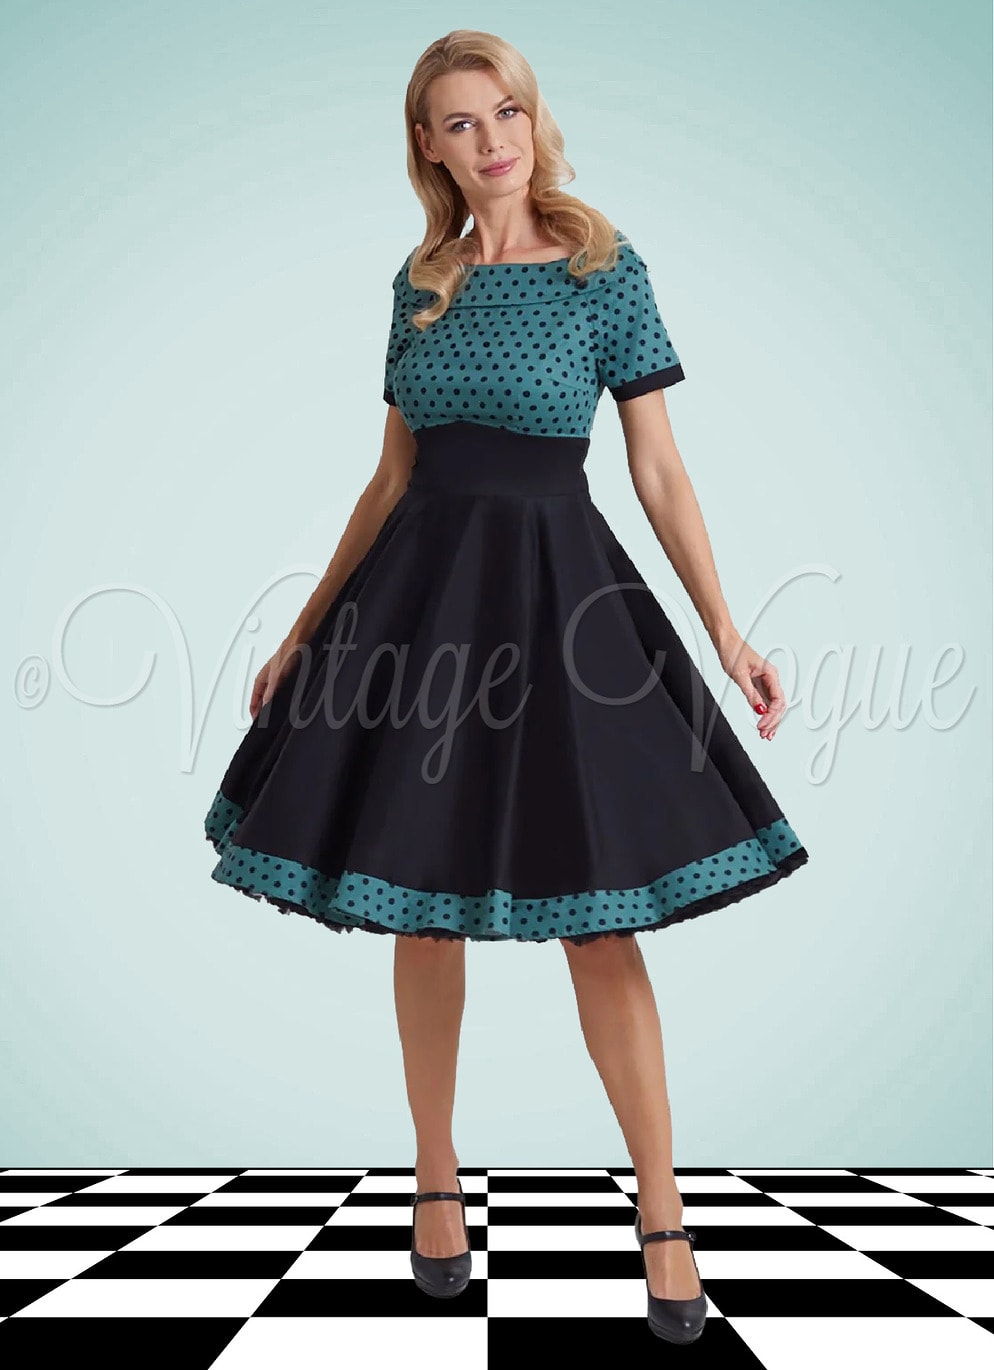 50er Jahre Petticoat Damenkleid Swing Jive Lindy Hop Rock n Roll Dress Punkte Polka Dots gepunktet tupfen